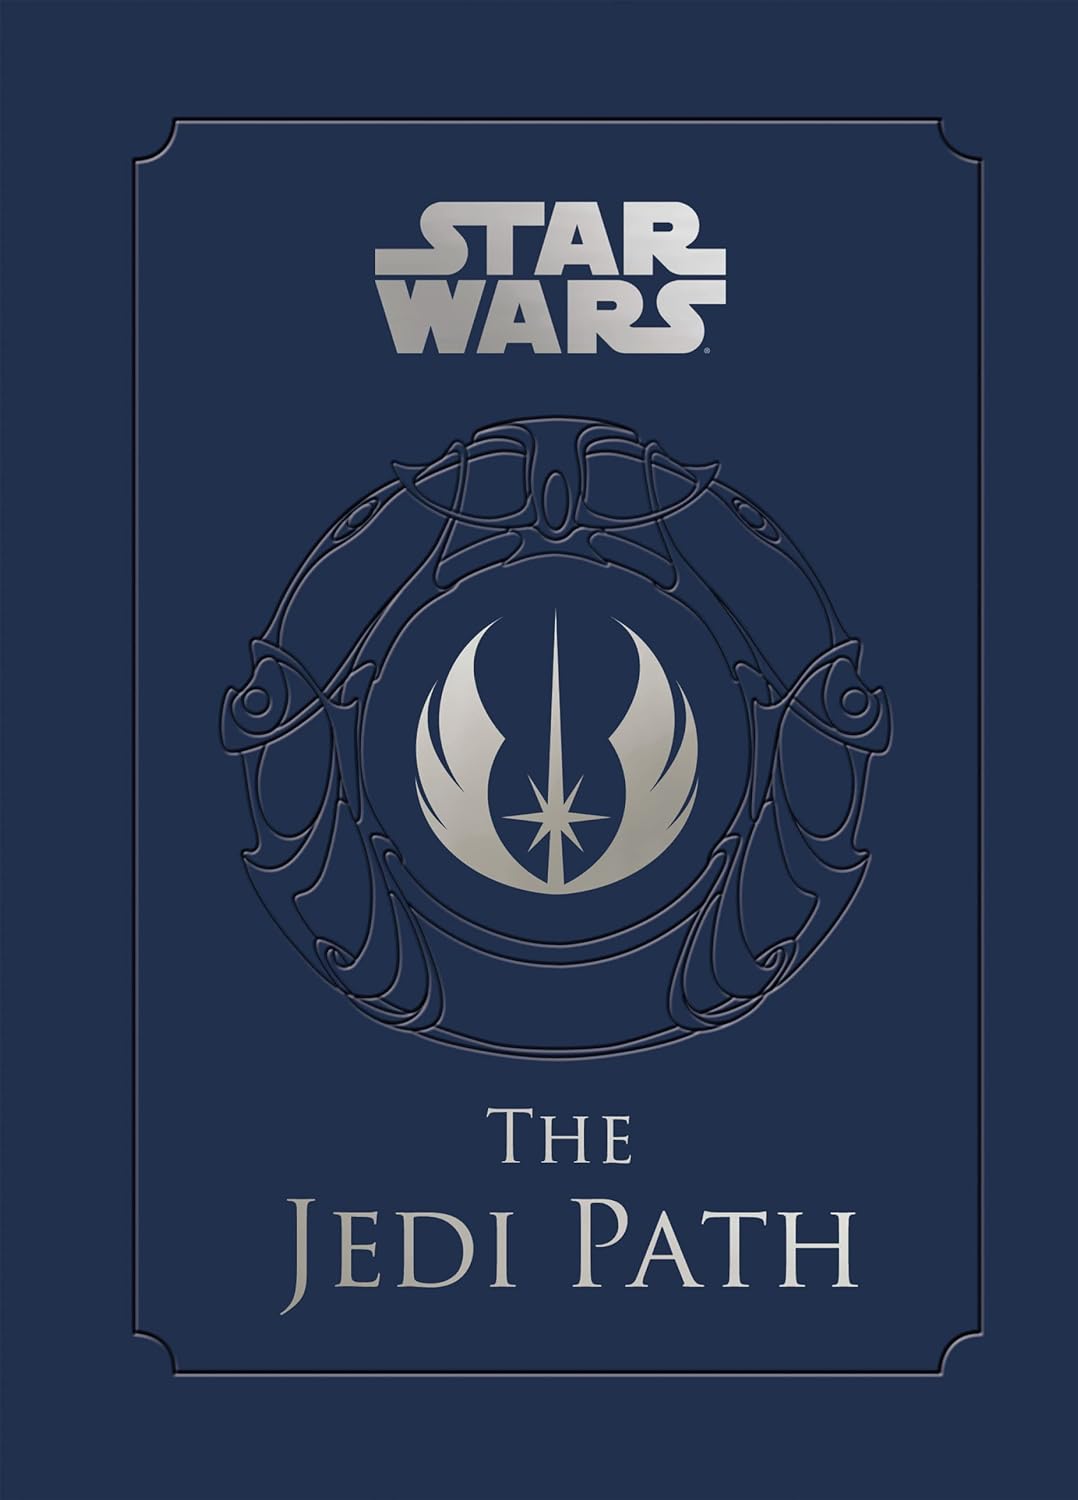 The Jedi Path by Daniel Wallace